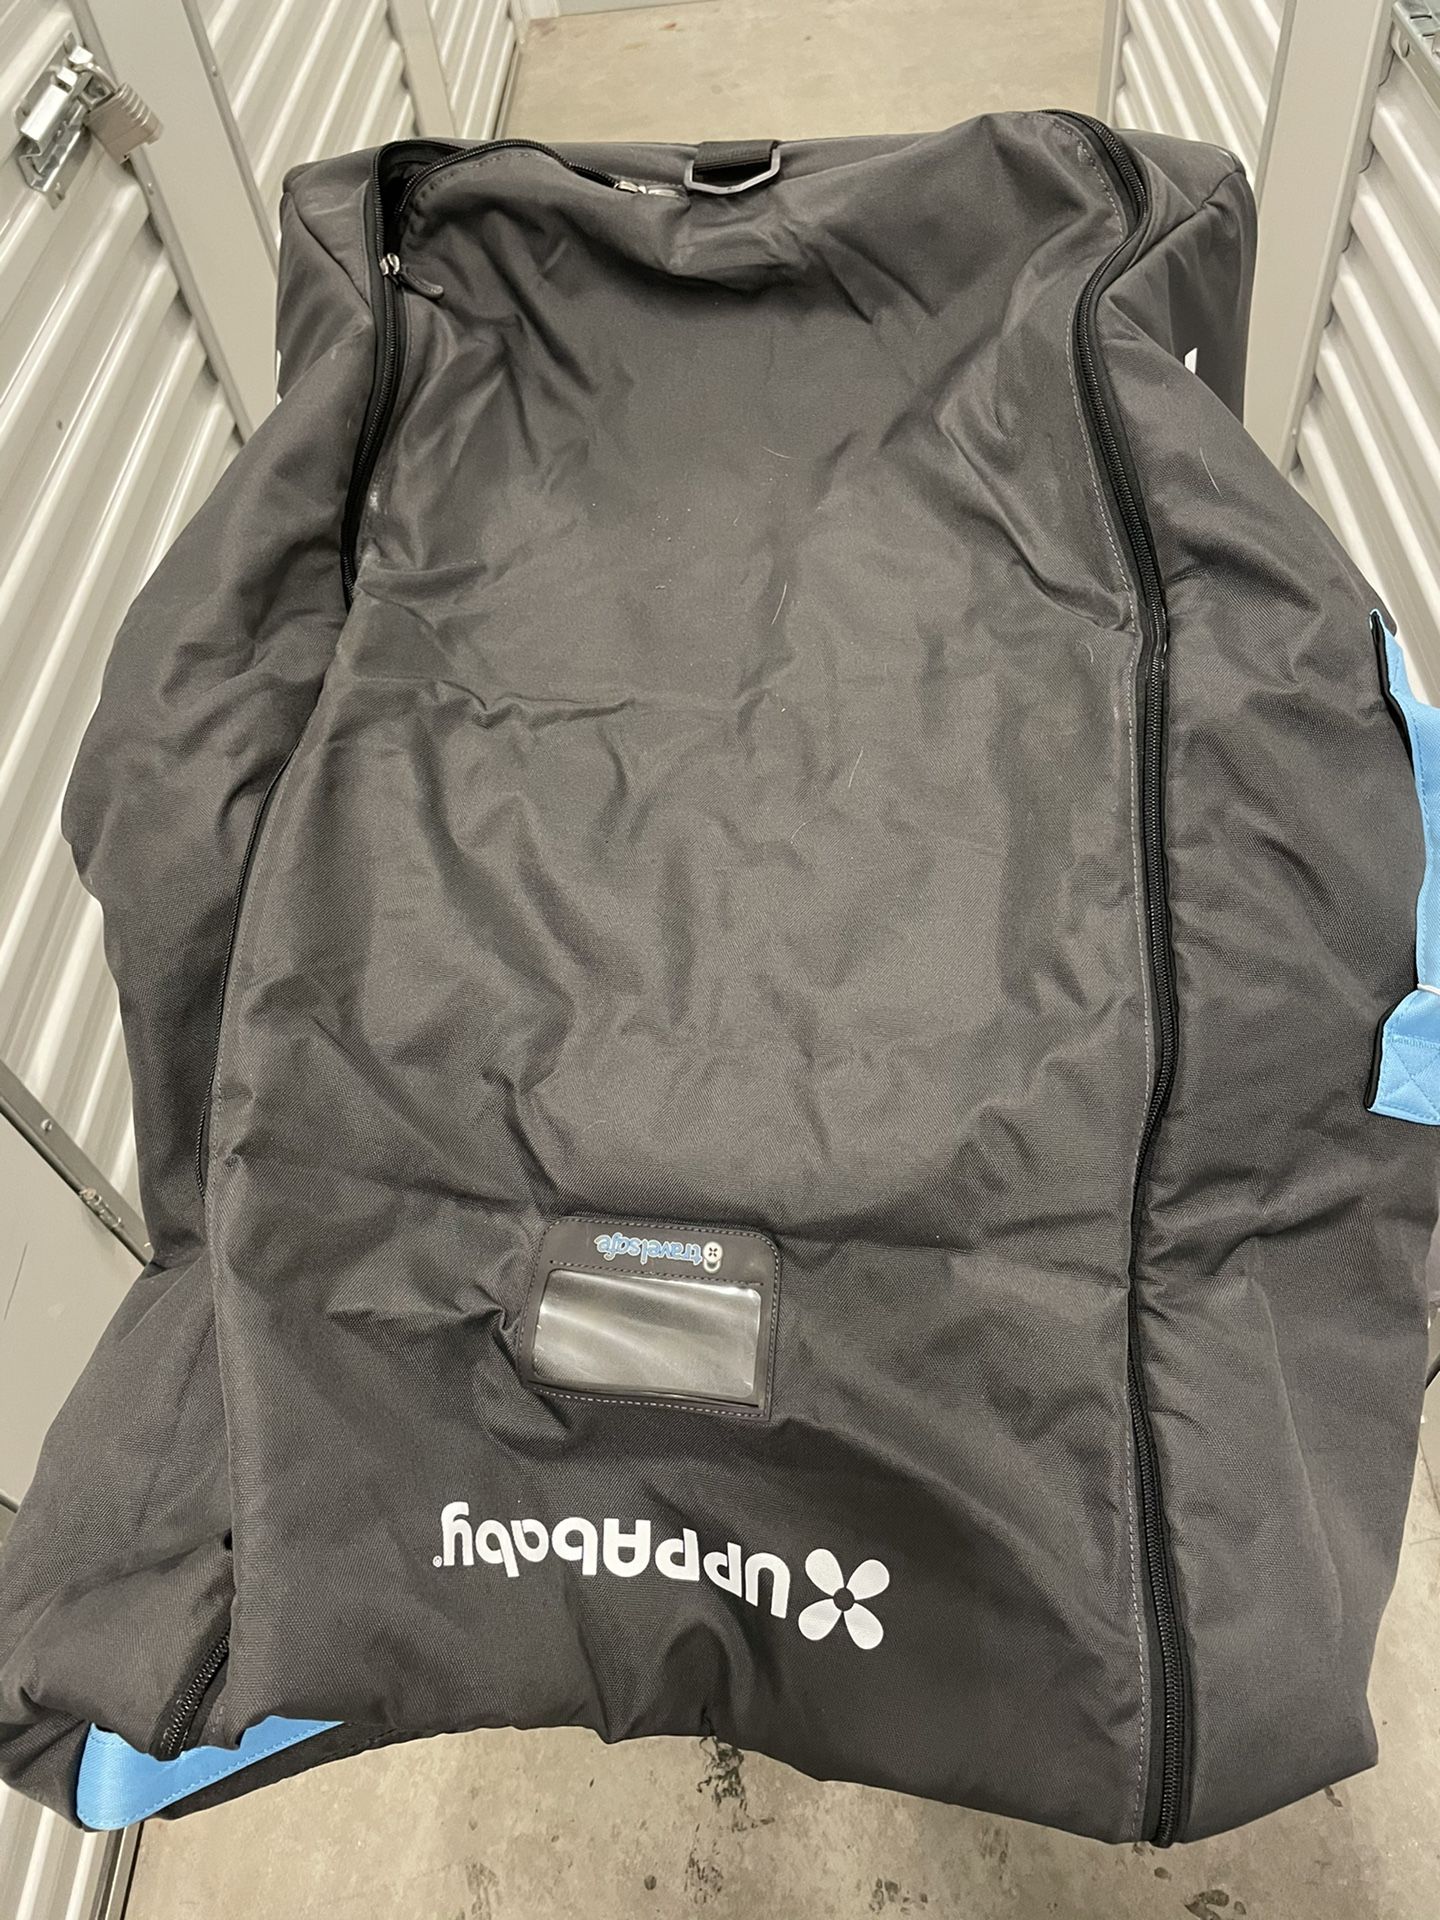 Uppababy Cruz Stroller Travel Bag